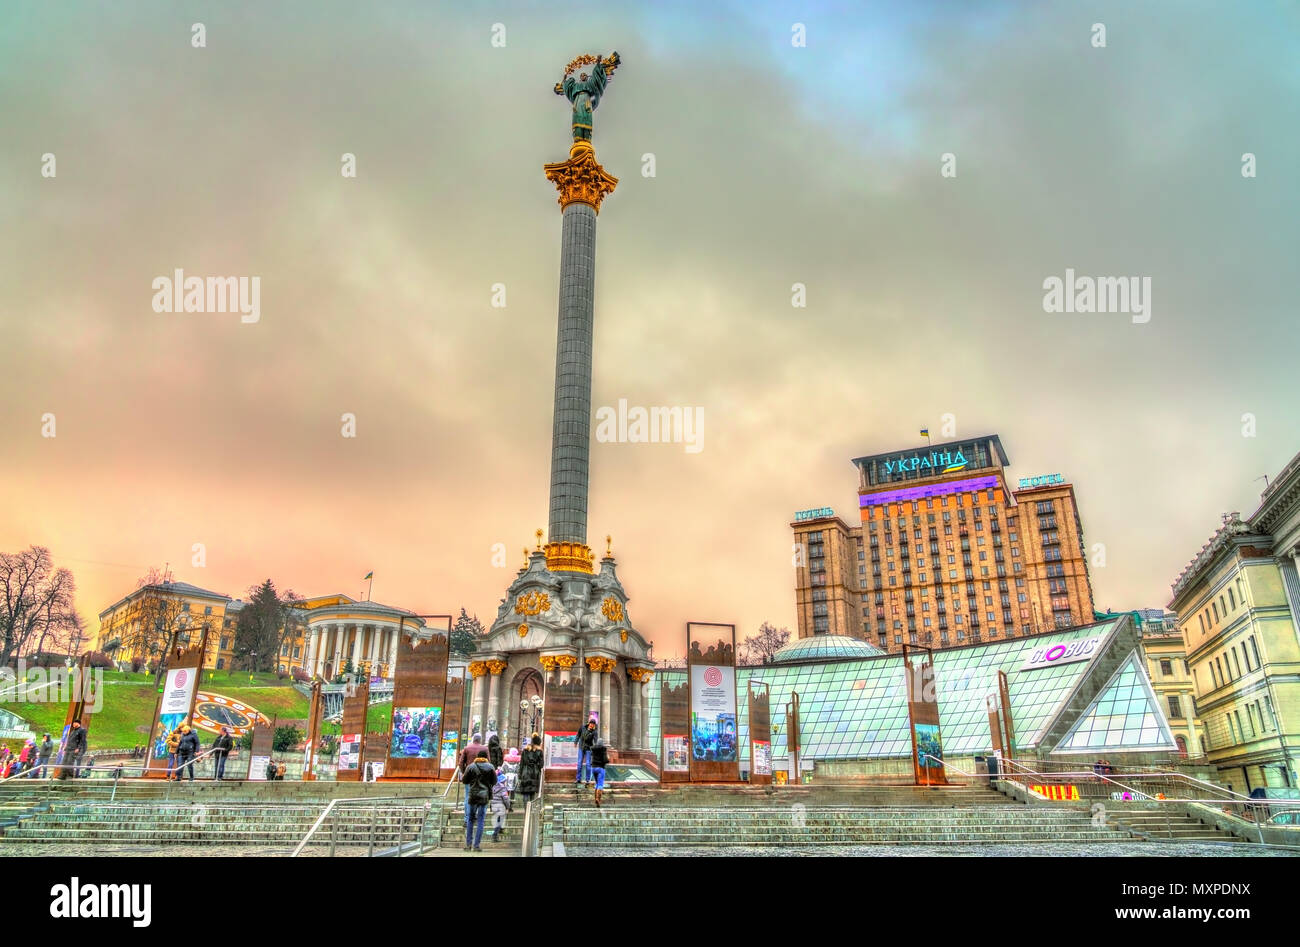 Independence Monument on Maidan Nezalezhnosti Square, the central square of Kiev, Ukraine Stock Photo